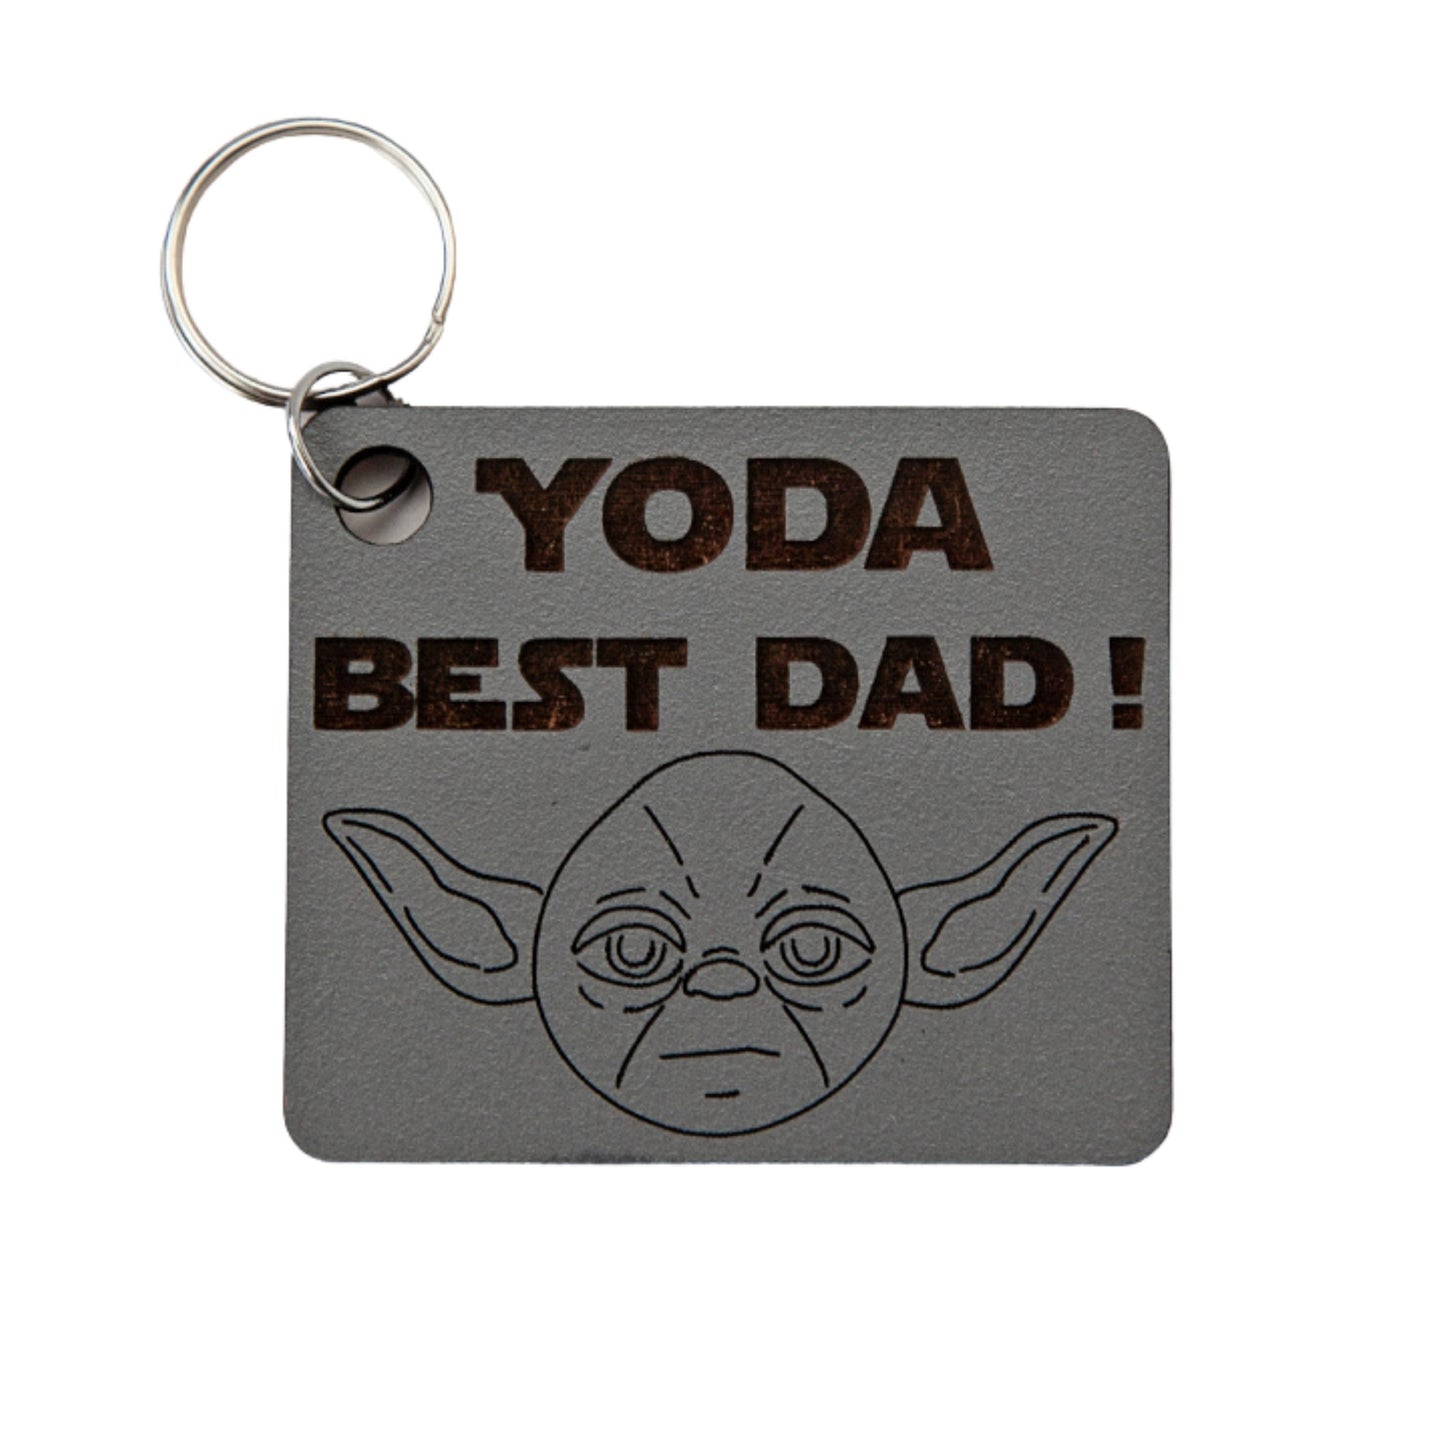 Yoda Best Dad! Wooden Keyring